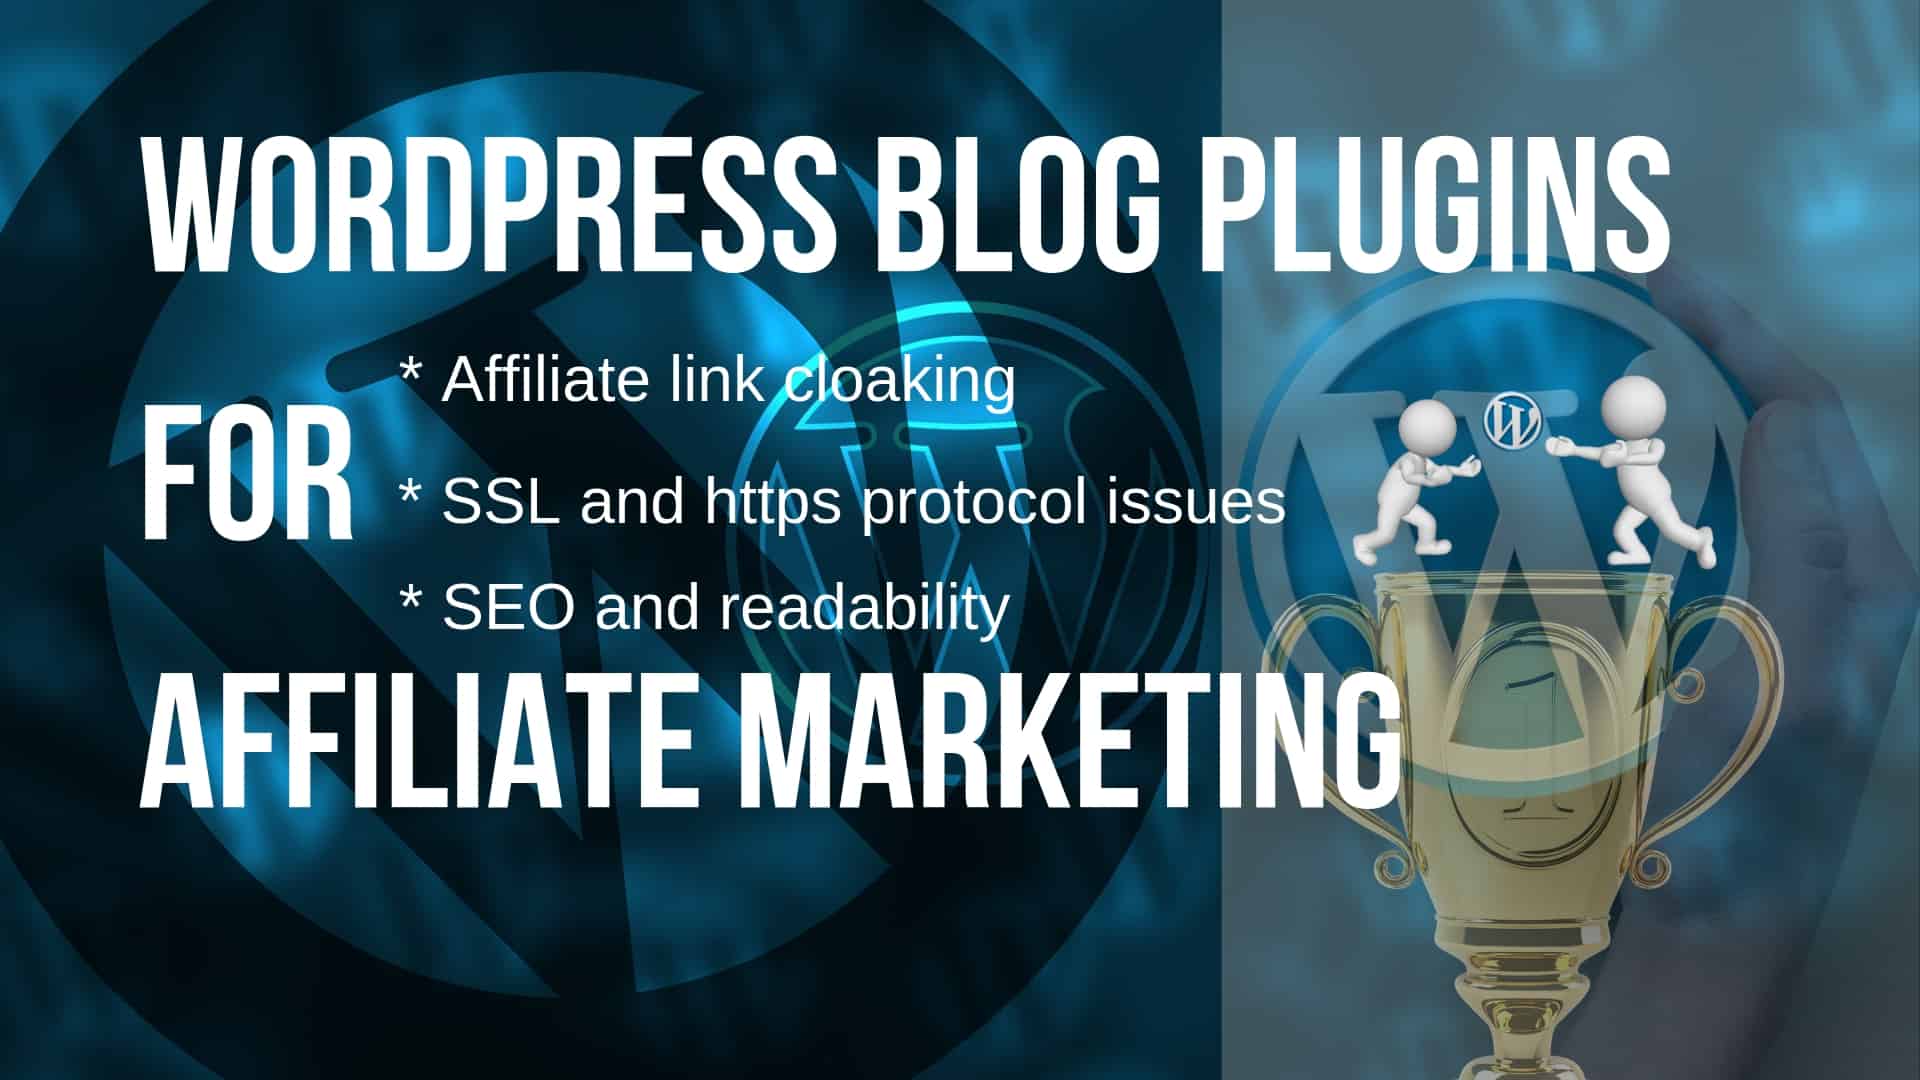 WordPress blog plugins for affiliate marketing